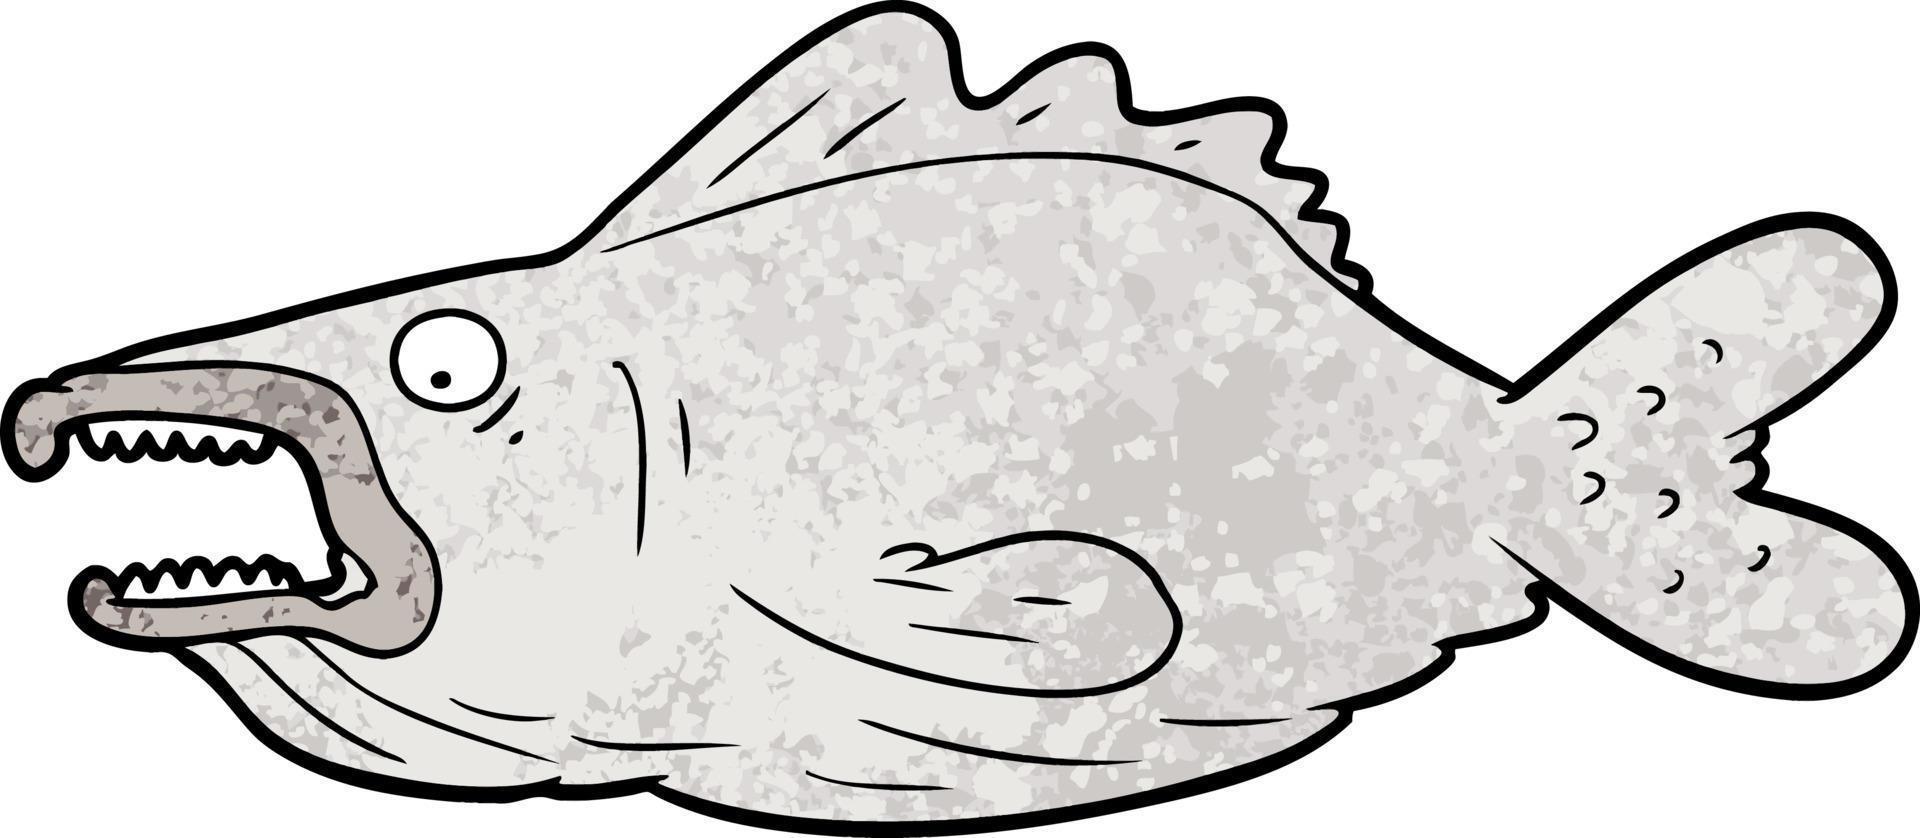 peixe feio dos desenhos animados vetor